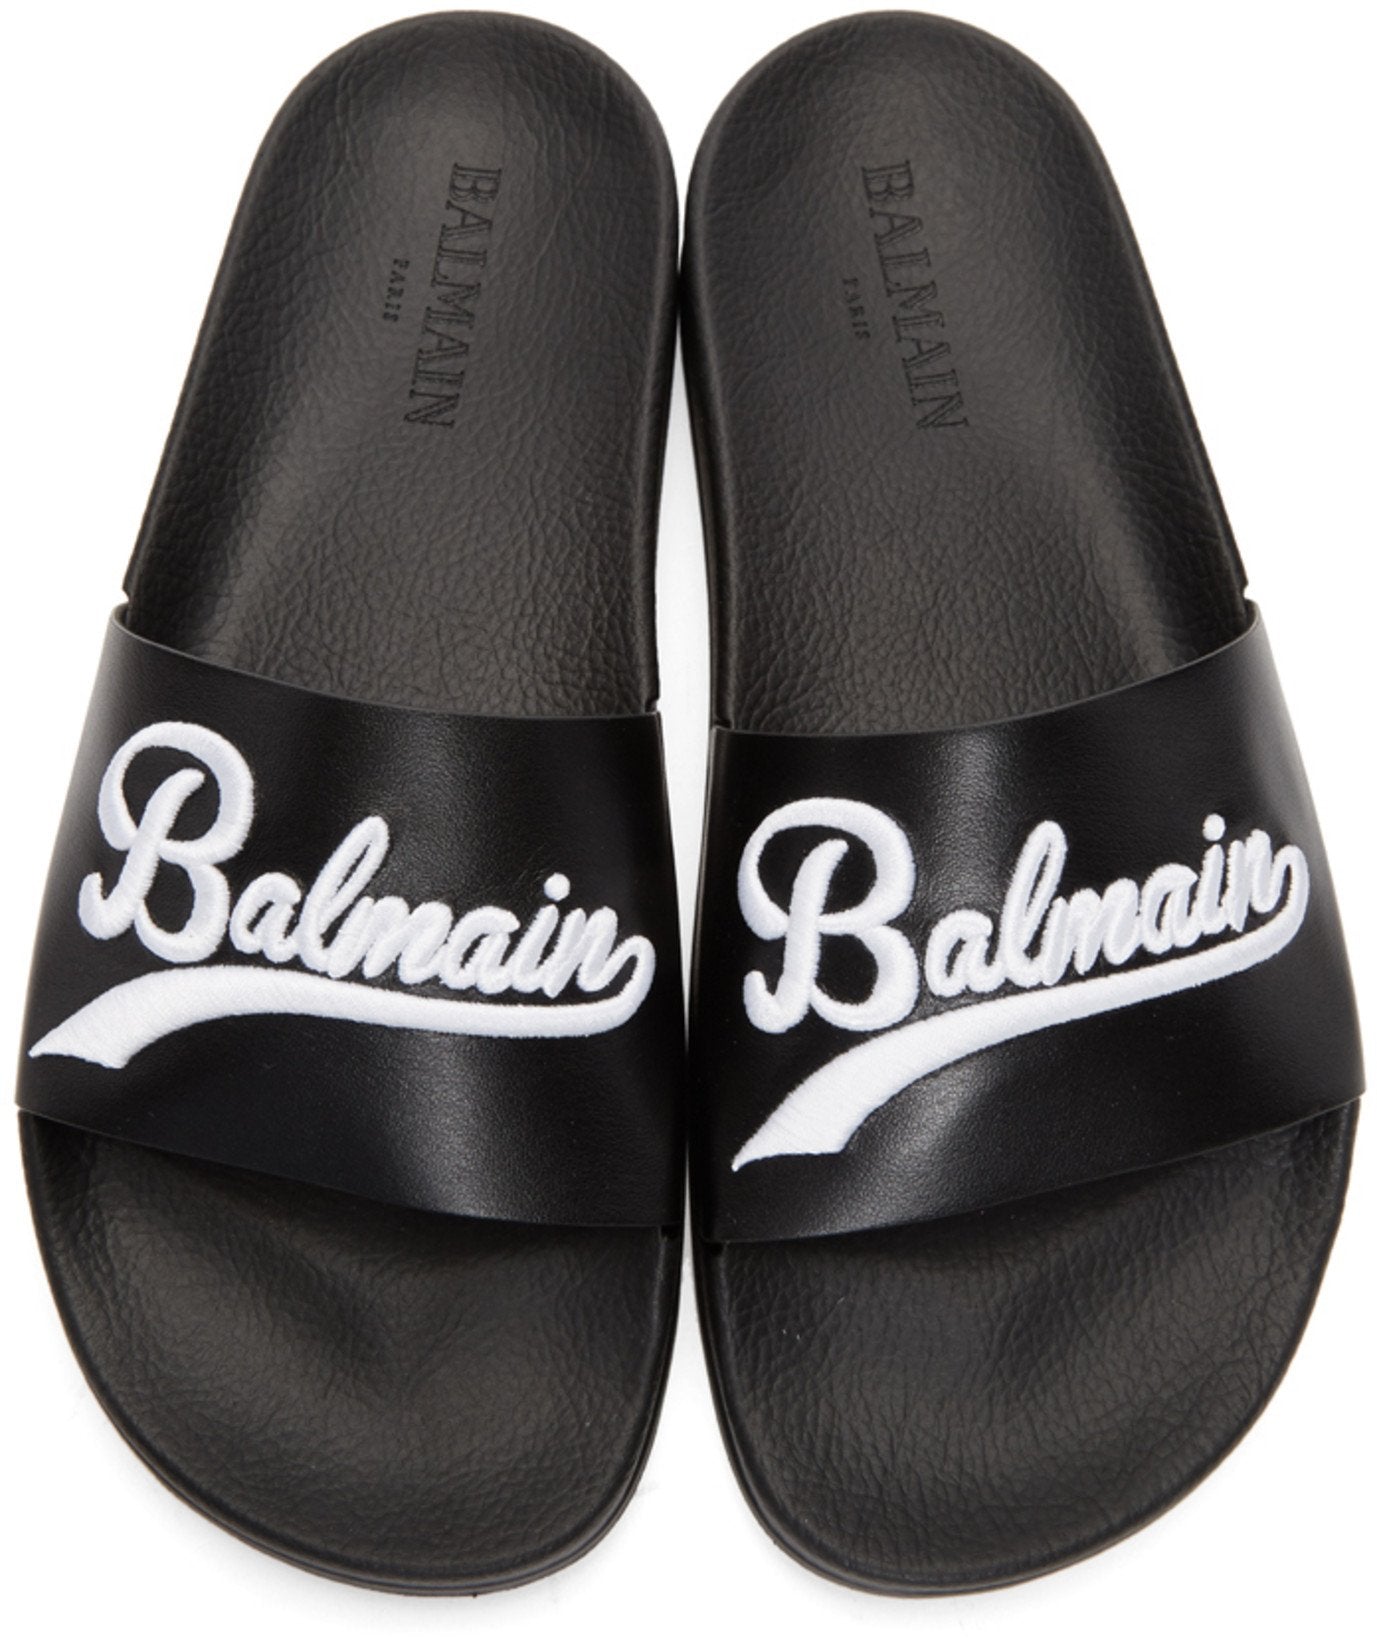 Balmain Calypso Slides 'Black'